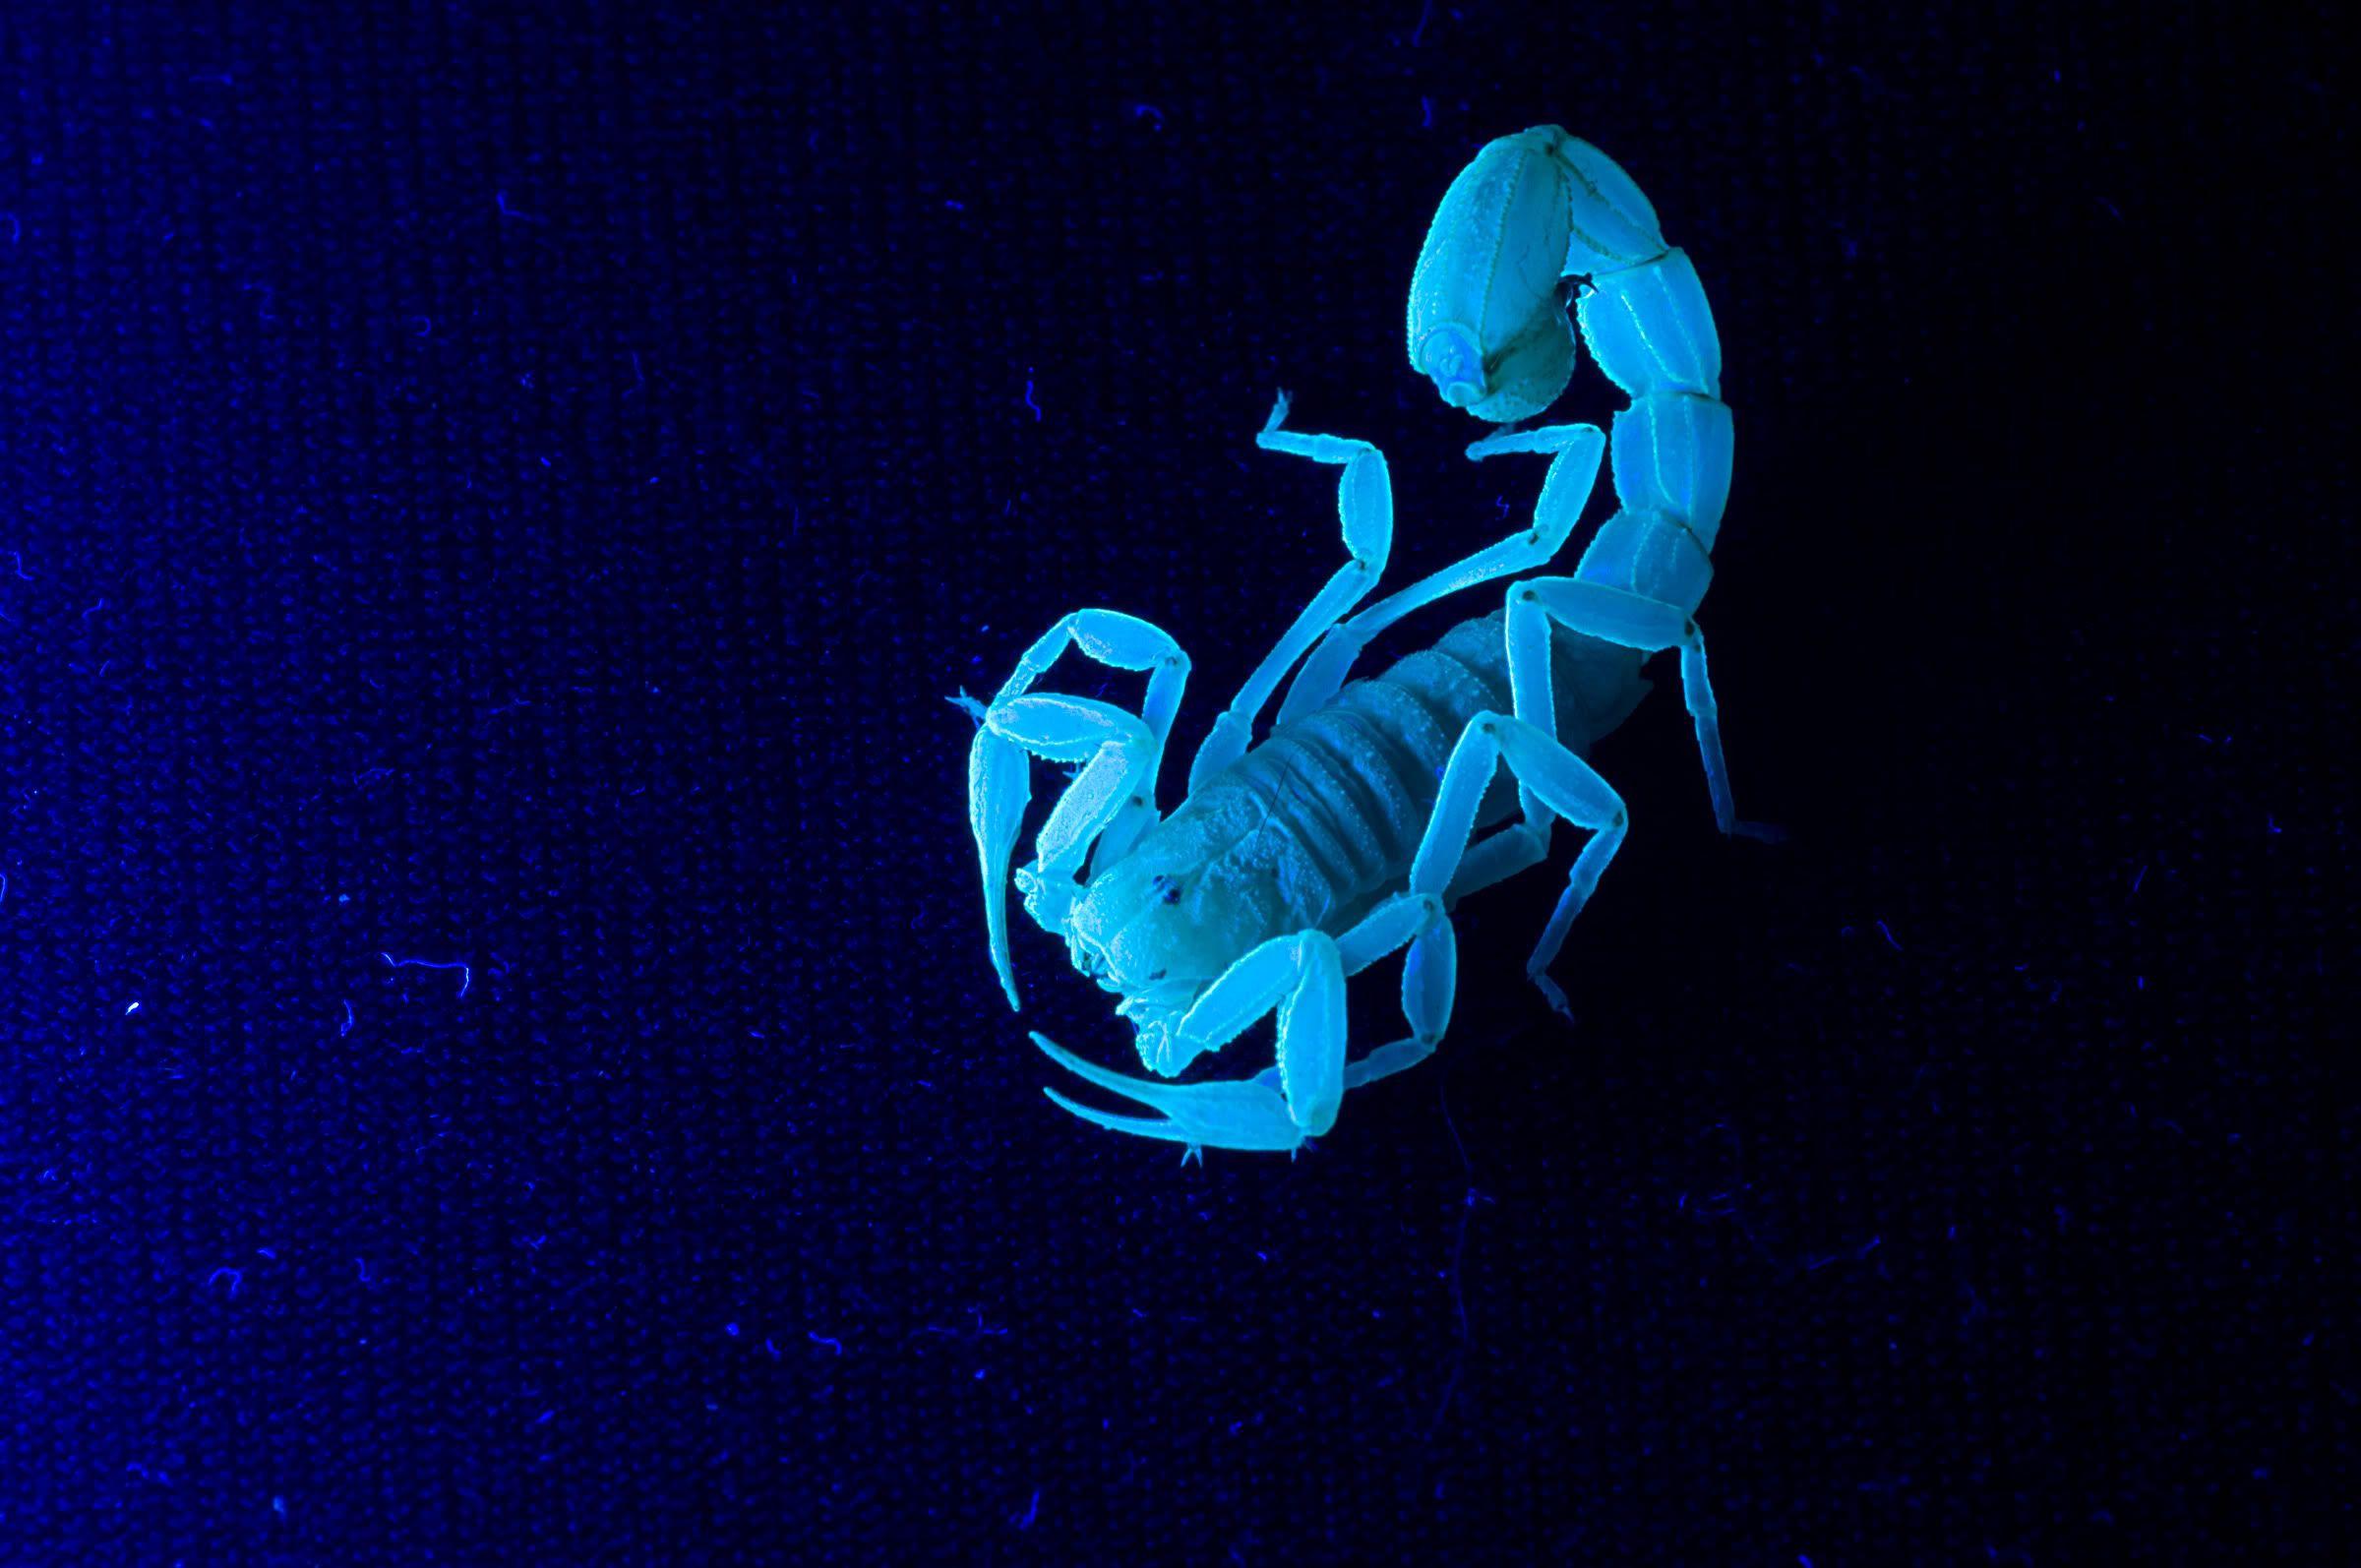 Scorpion image HD Picture. Beautiful image HD Picture & Desktop